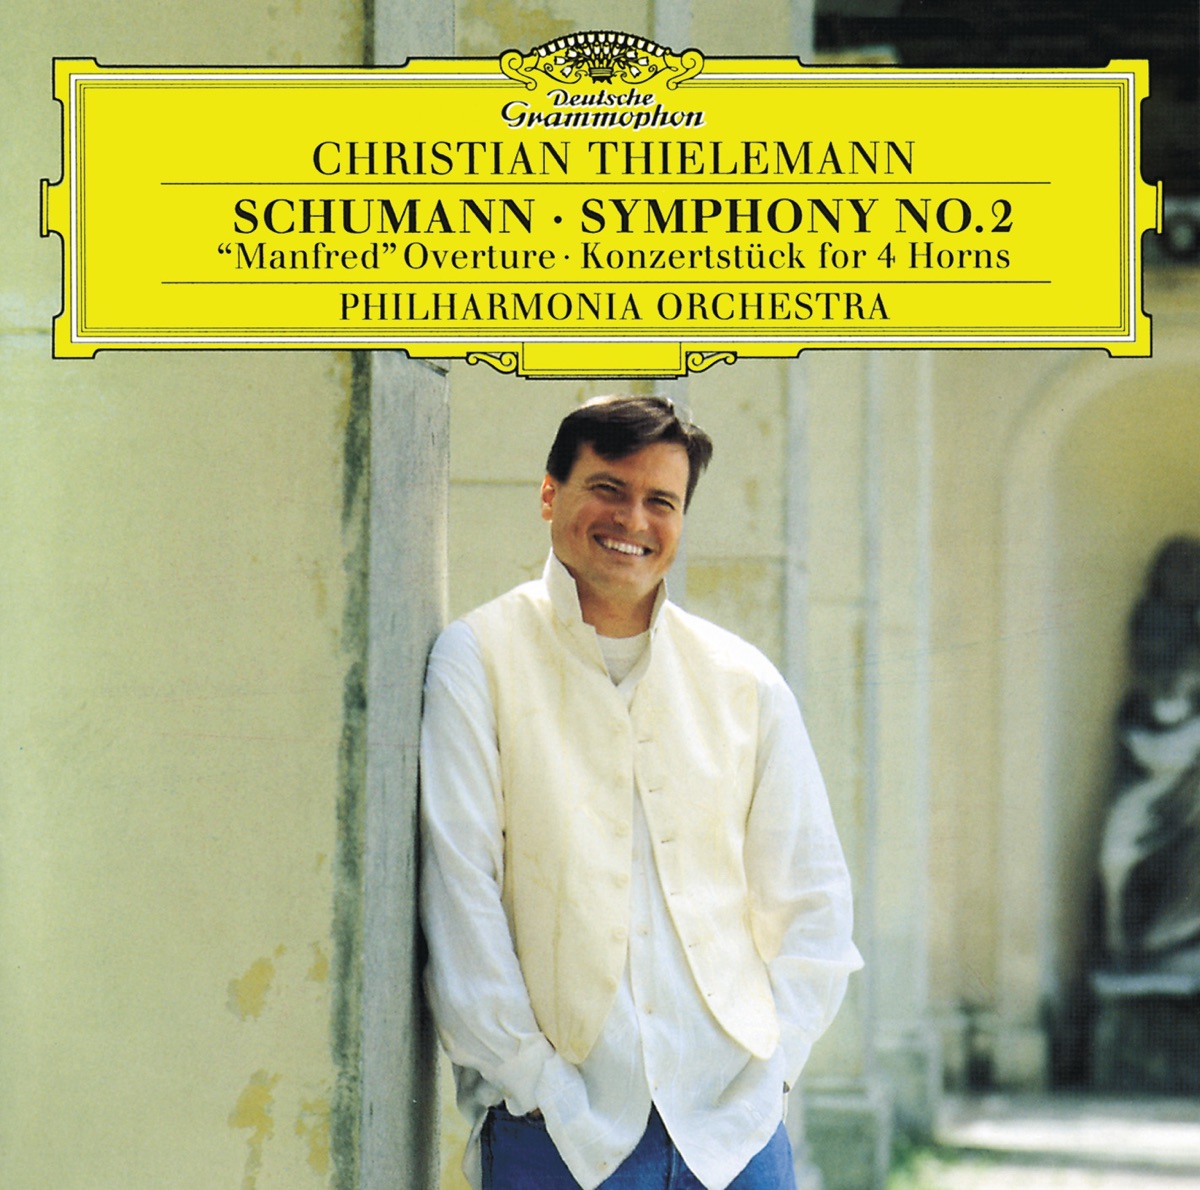 Schumann: Symphony No. 2; "Manfred" Overture; Konzertstück for 4 Horns by  Christian Thielemann & Philharmonia Orchestra on Apple Music